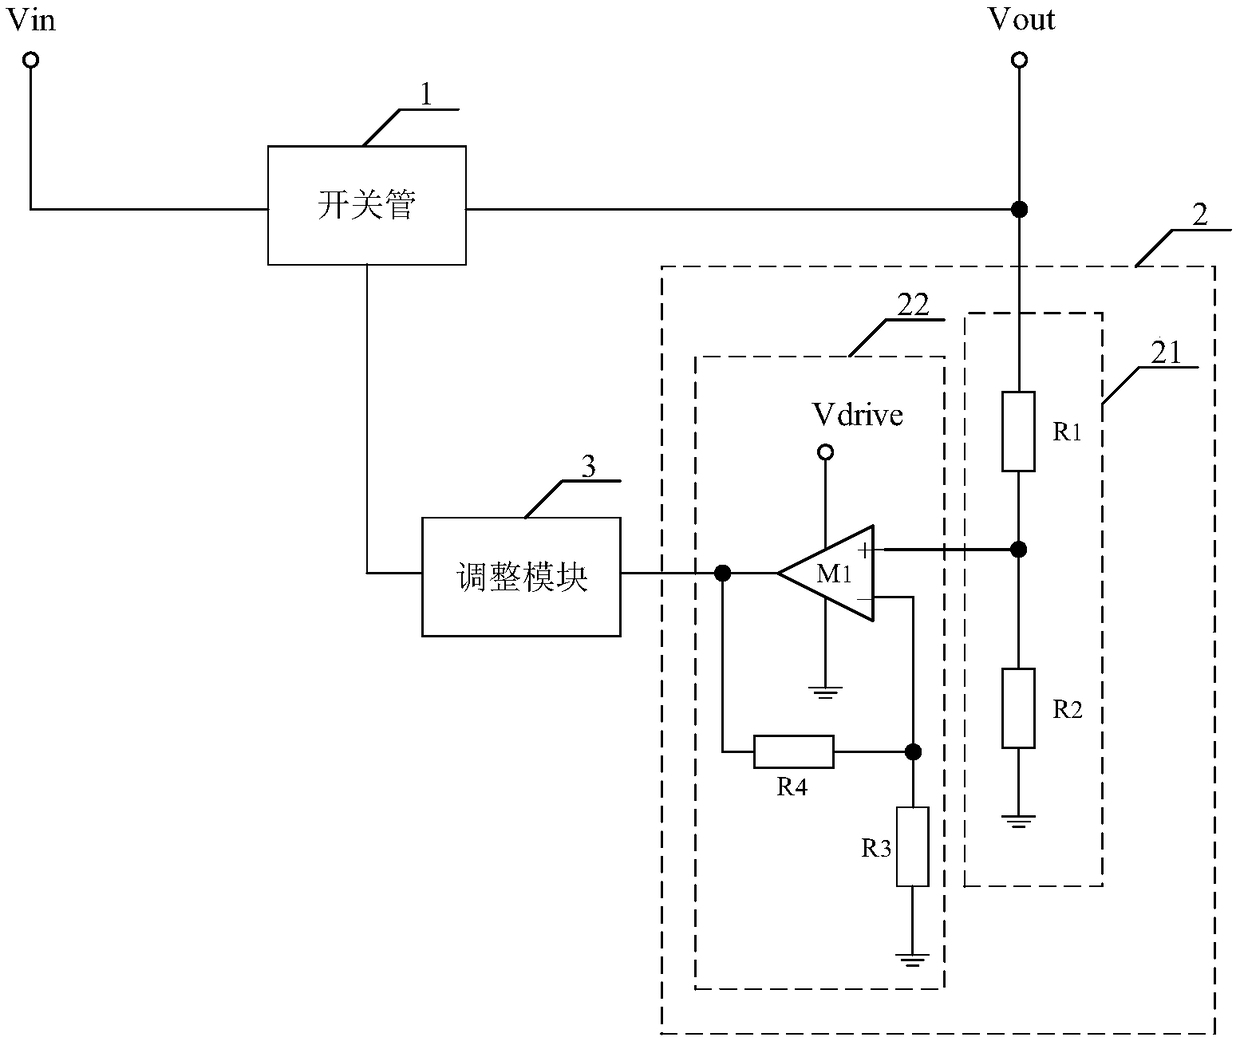 Voltage-reduction regulation circuit